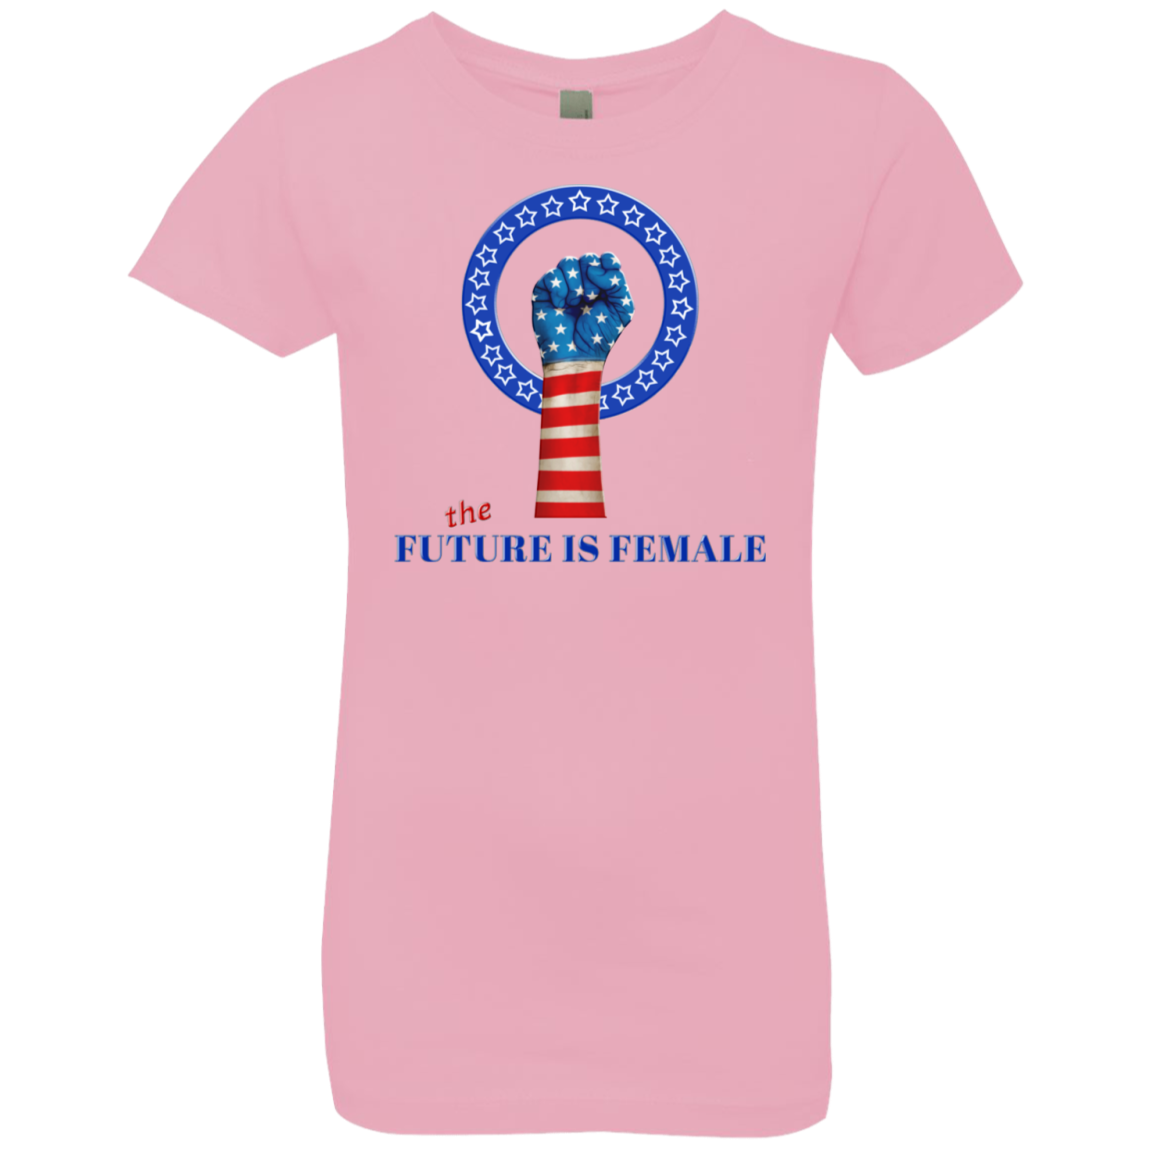 The Future Is Female - Girl's Premium Cotton T-Shirt